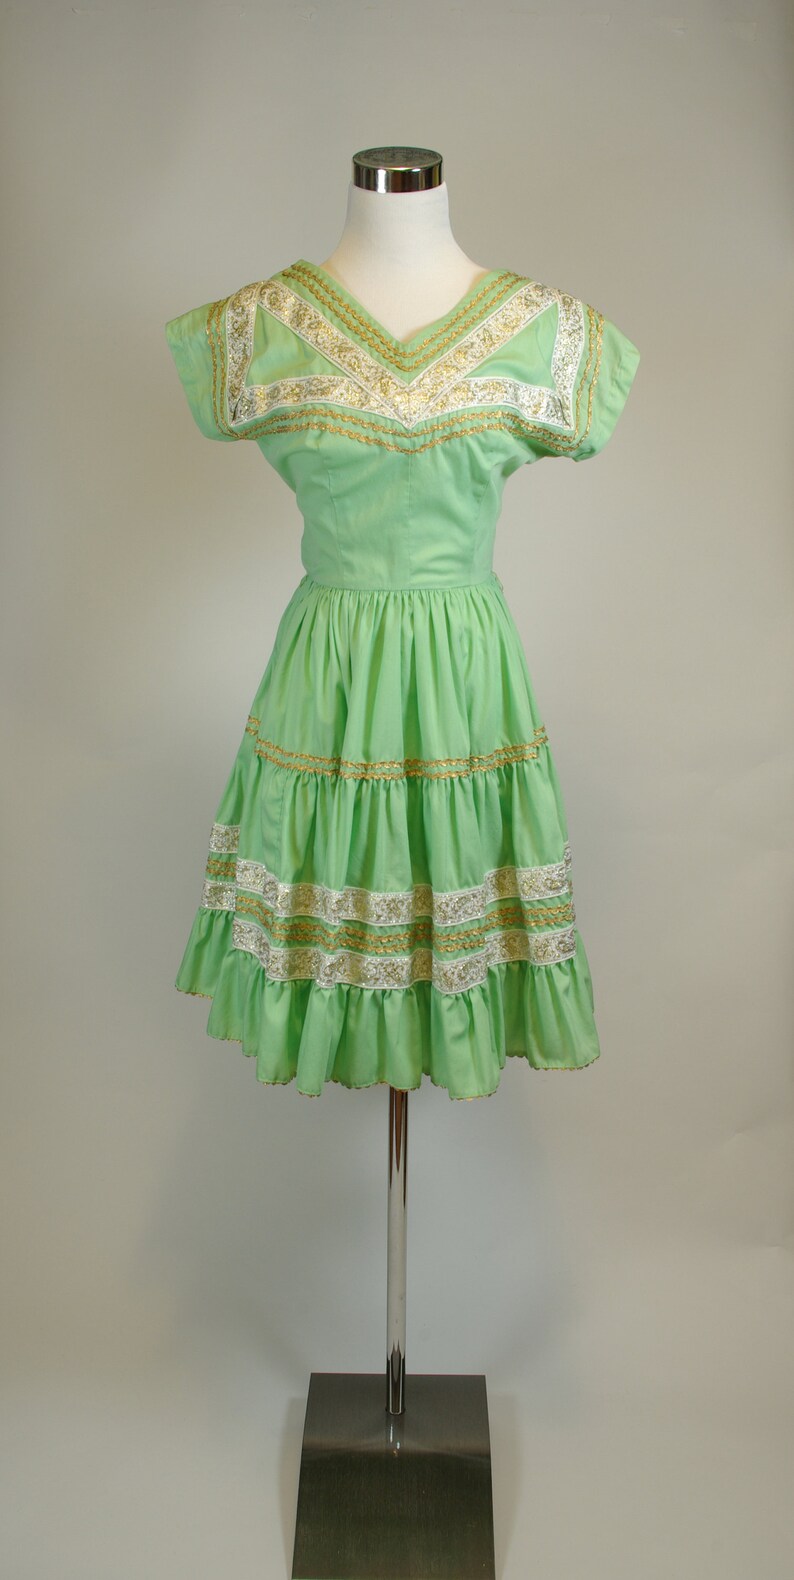 Pistachio Green Patio Dress Gold Rick Rack 25 inch 63 cm Waist Fit and Flare Rockabilly